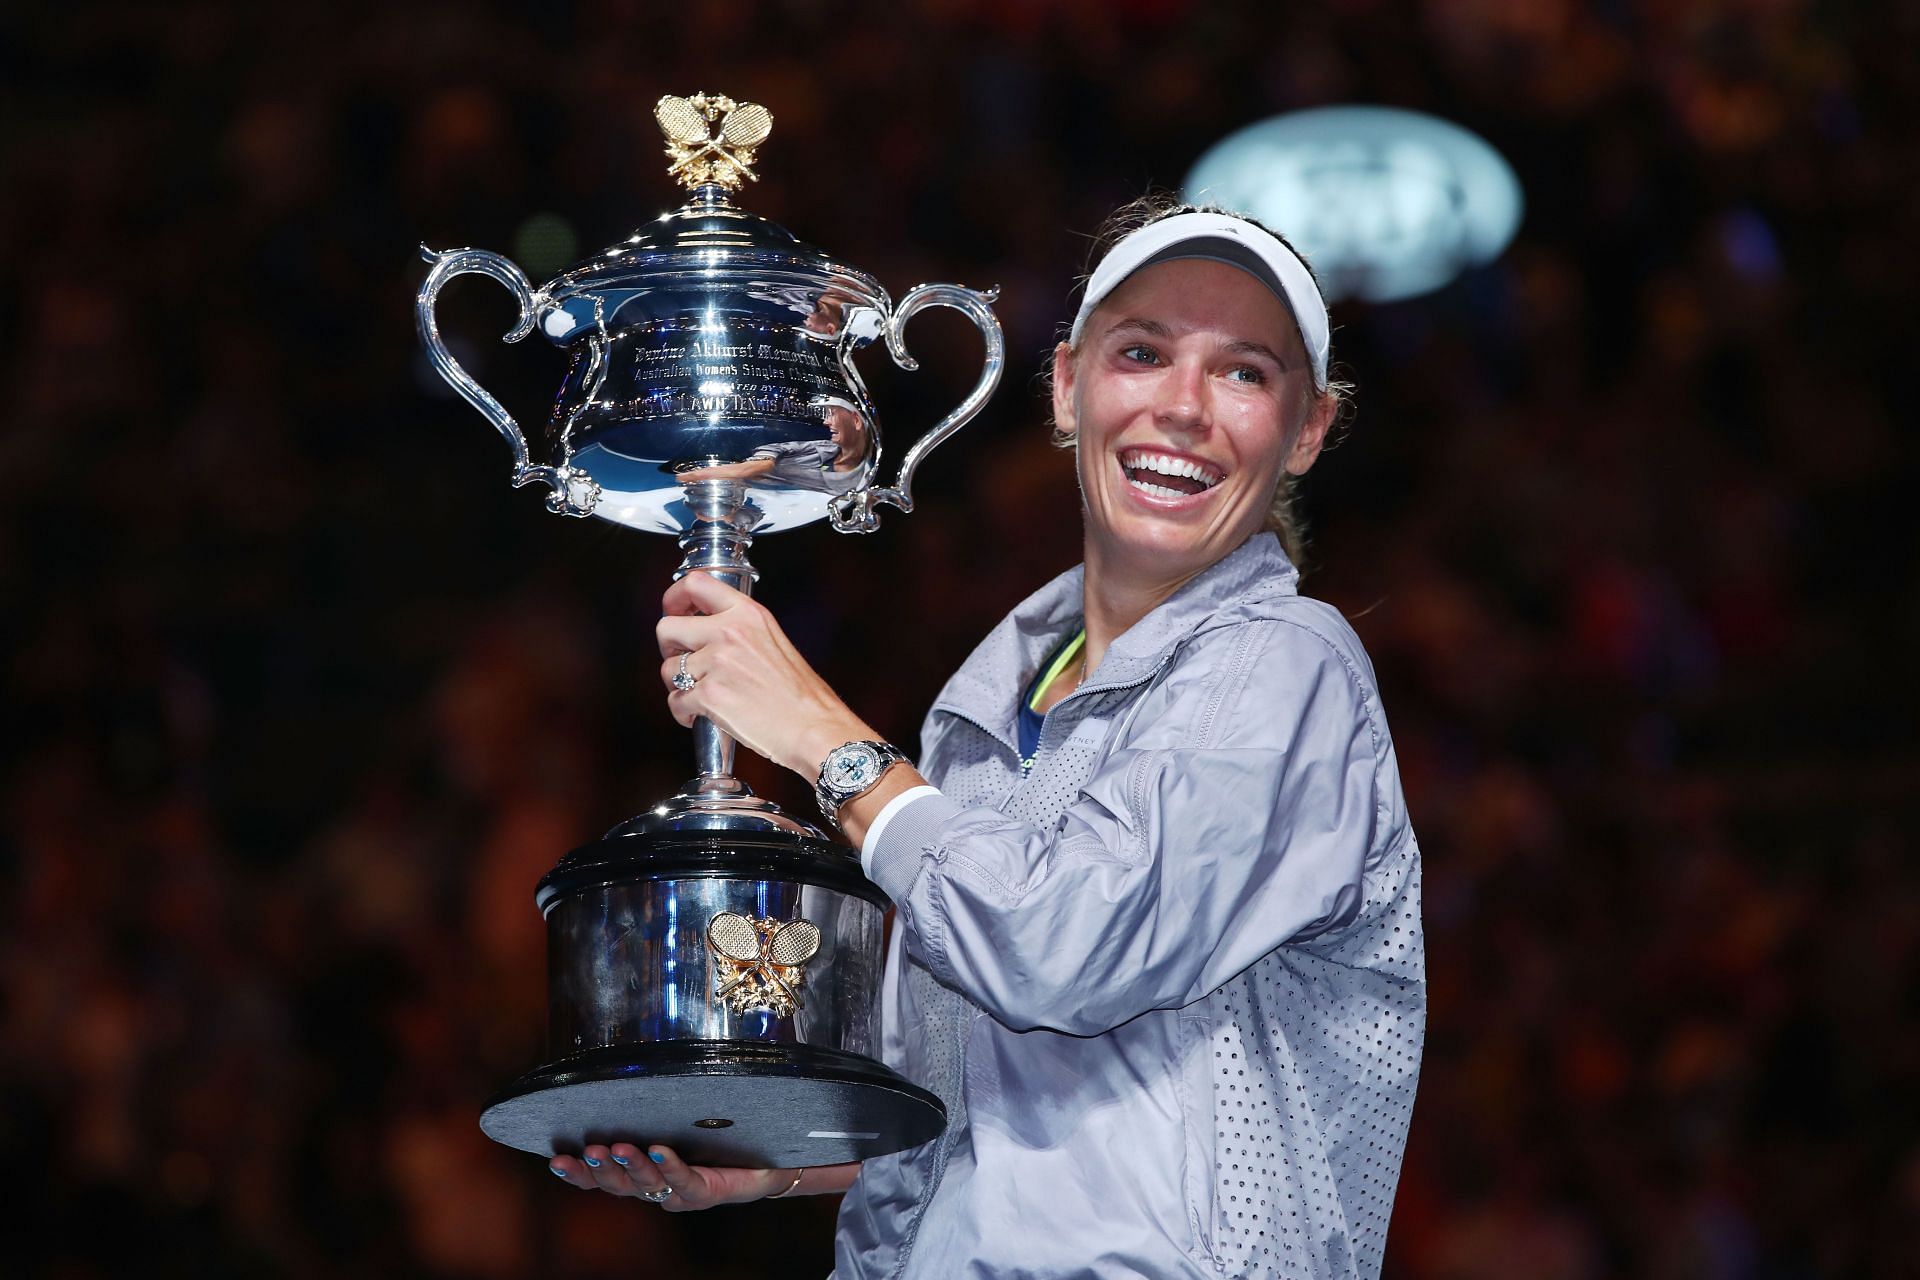 Caroline Wozniacki won the 2018 Australian Open